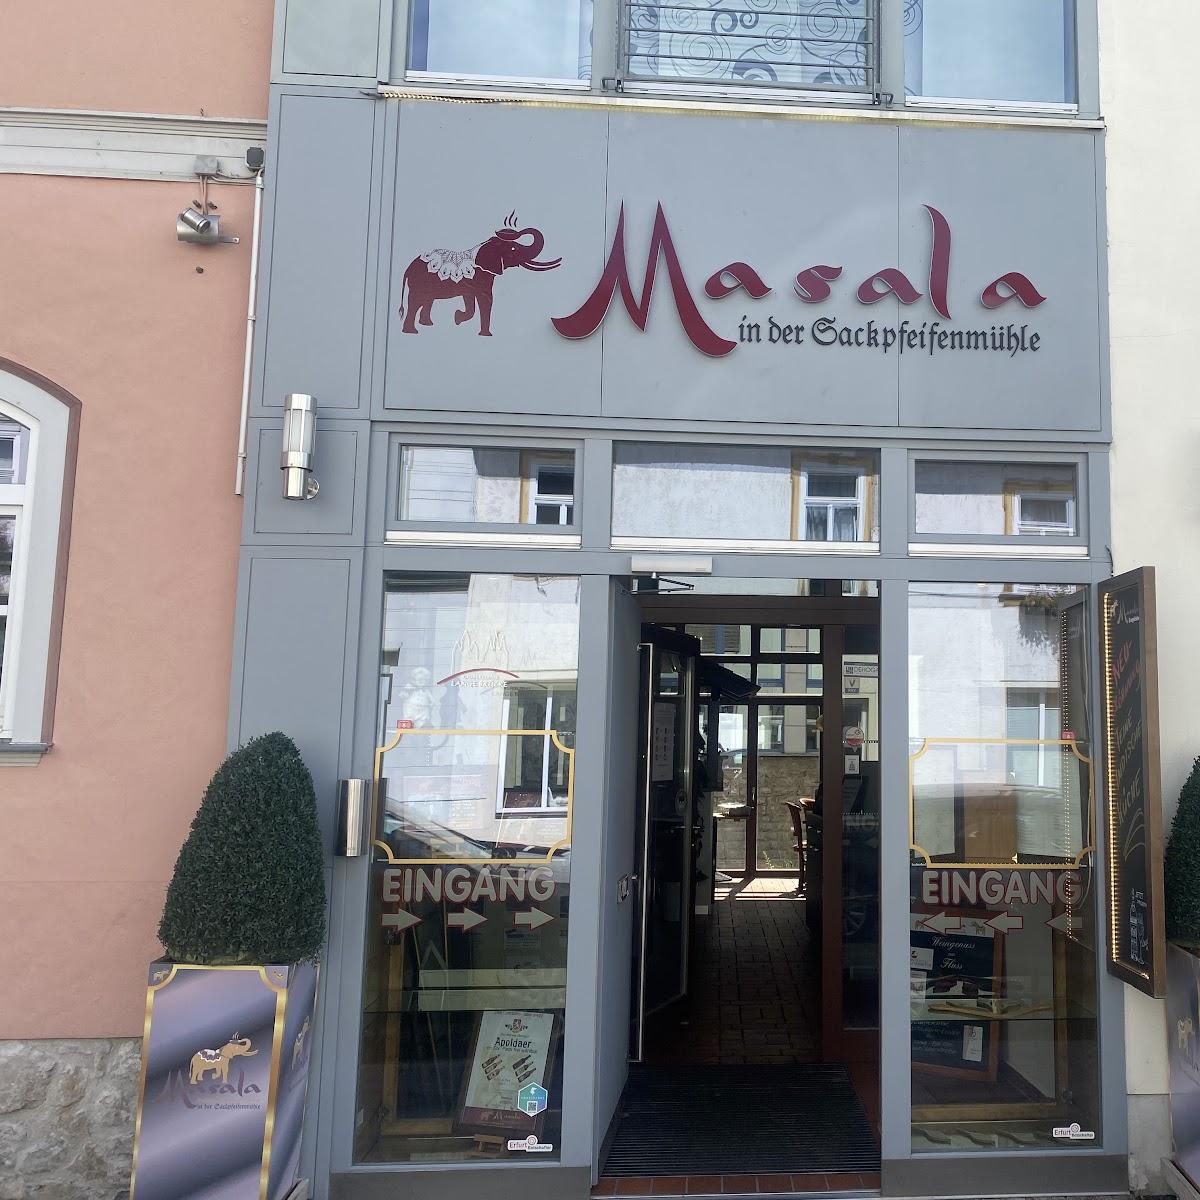 Restaurant "Restaurant Masala" in Erfurt